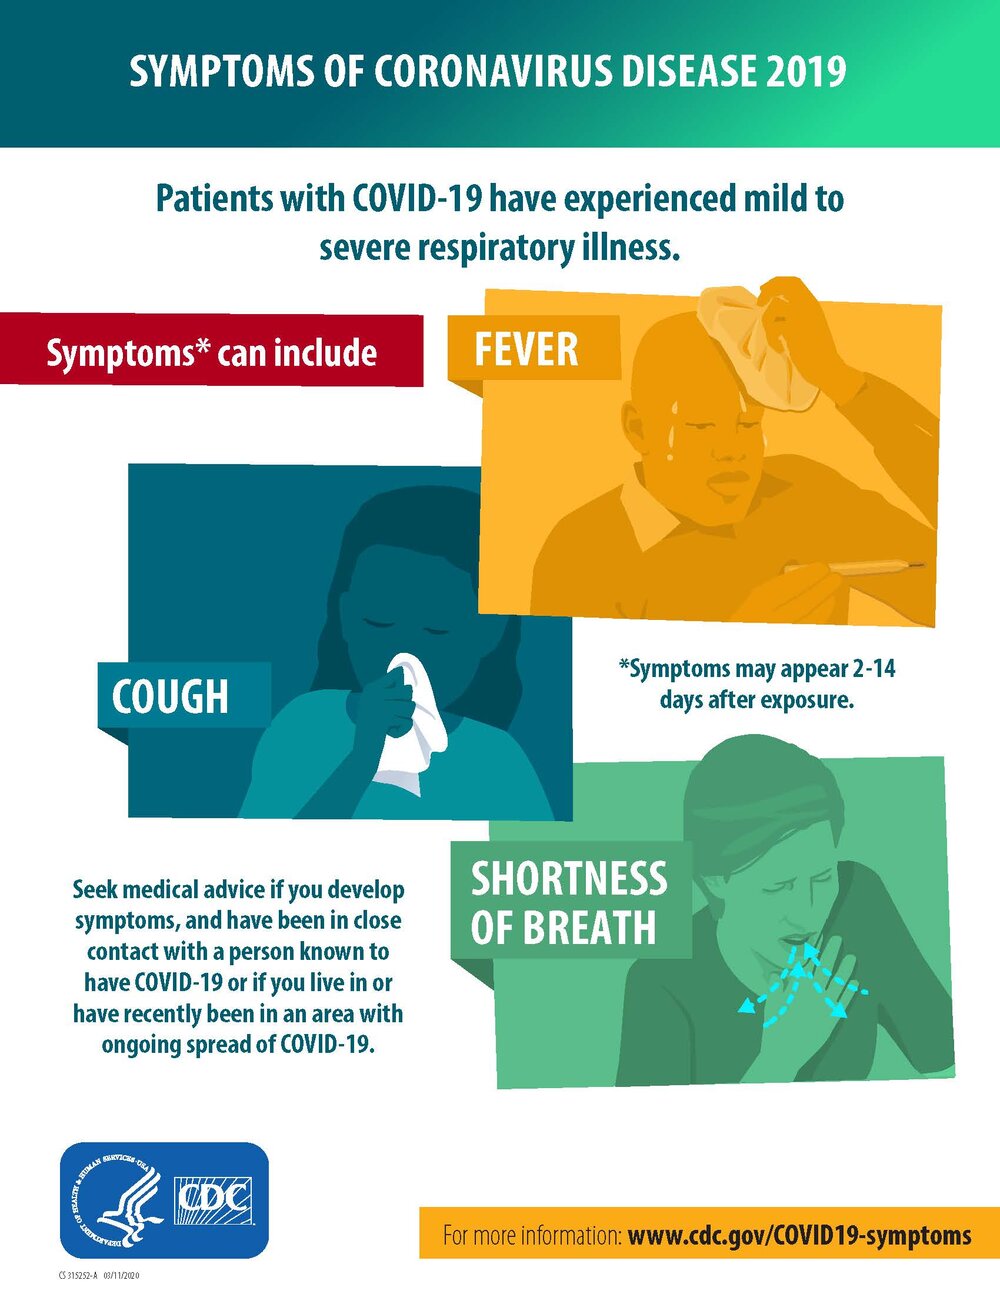 COVID19-symptoms.jpg